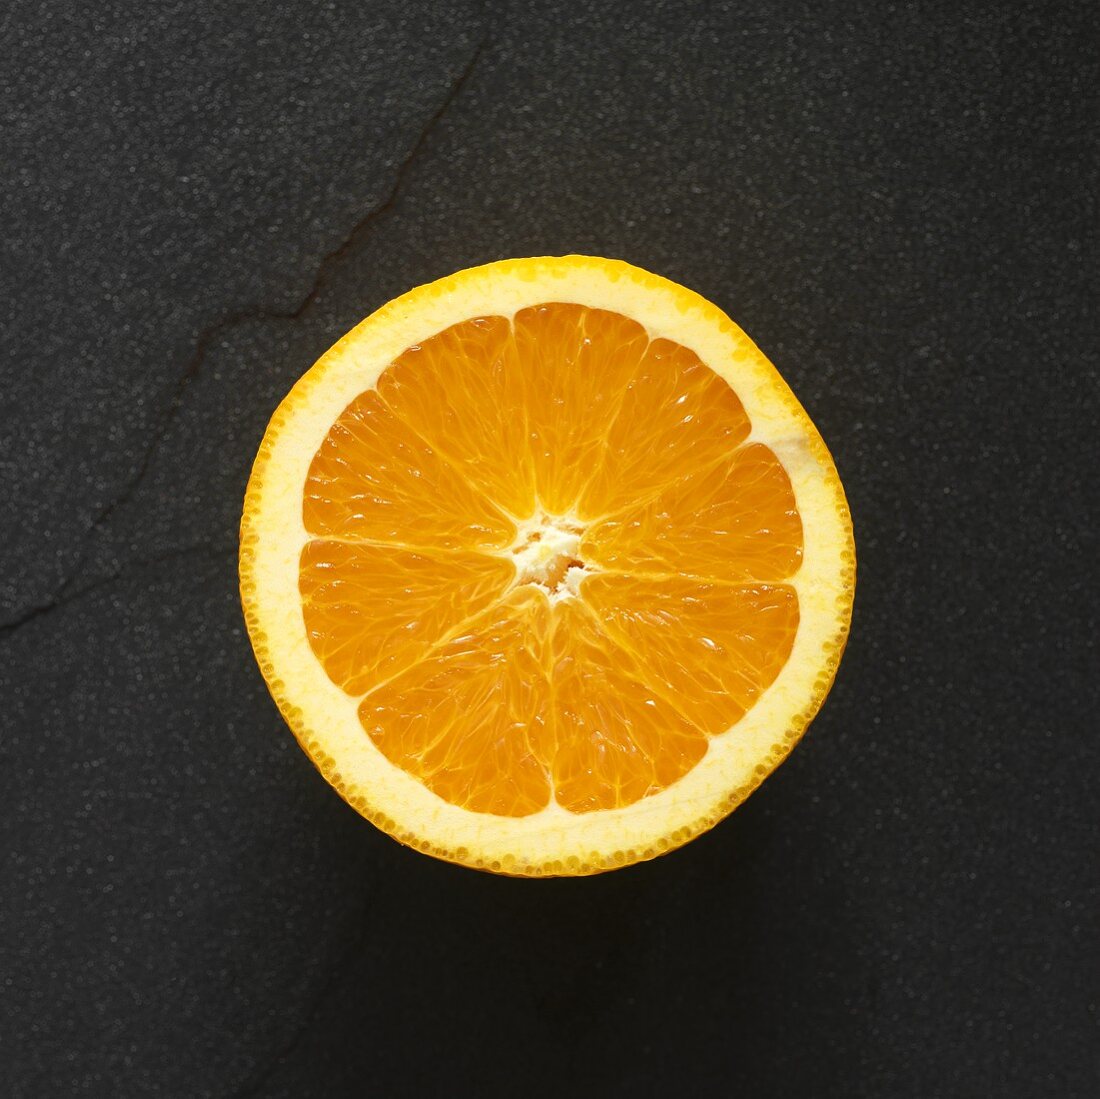 Half an orange from above